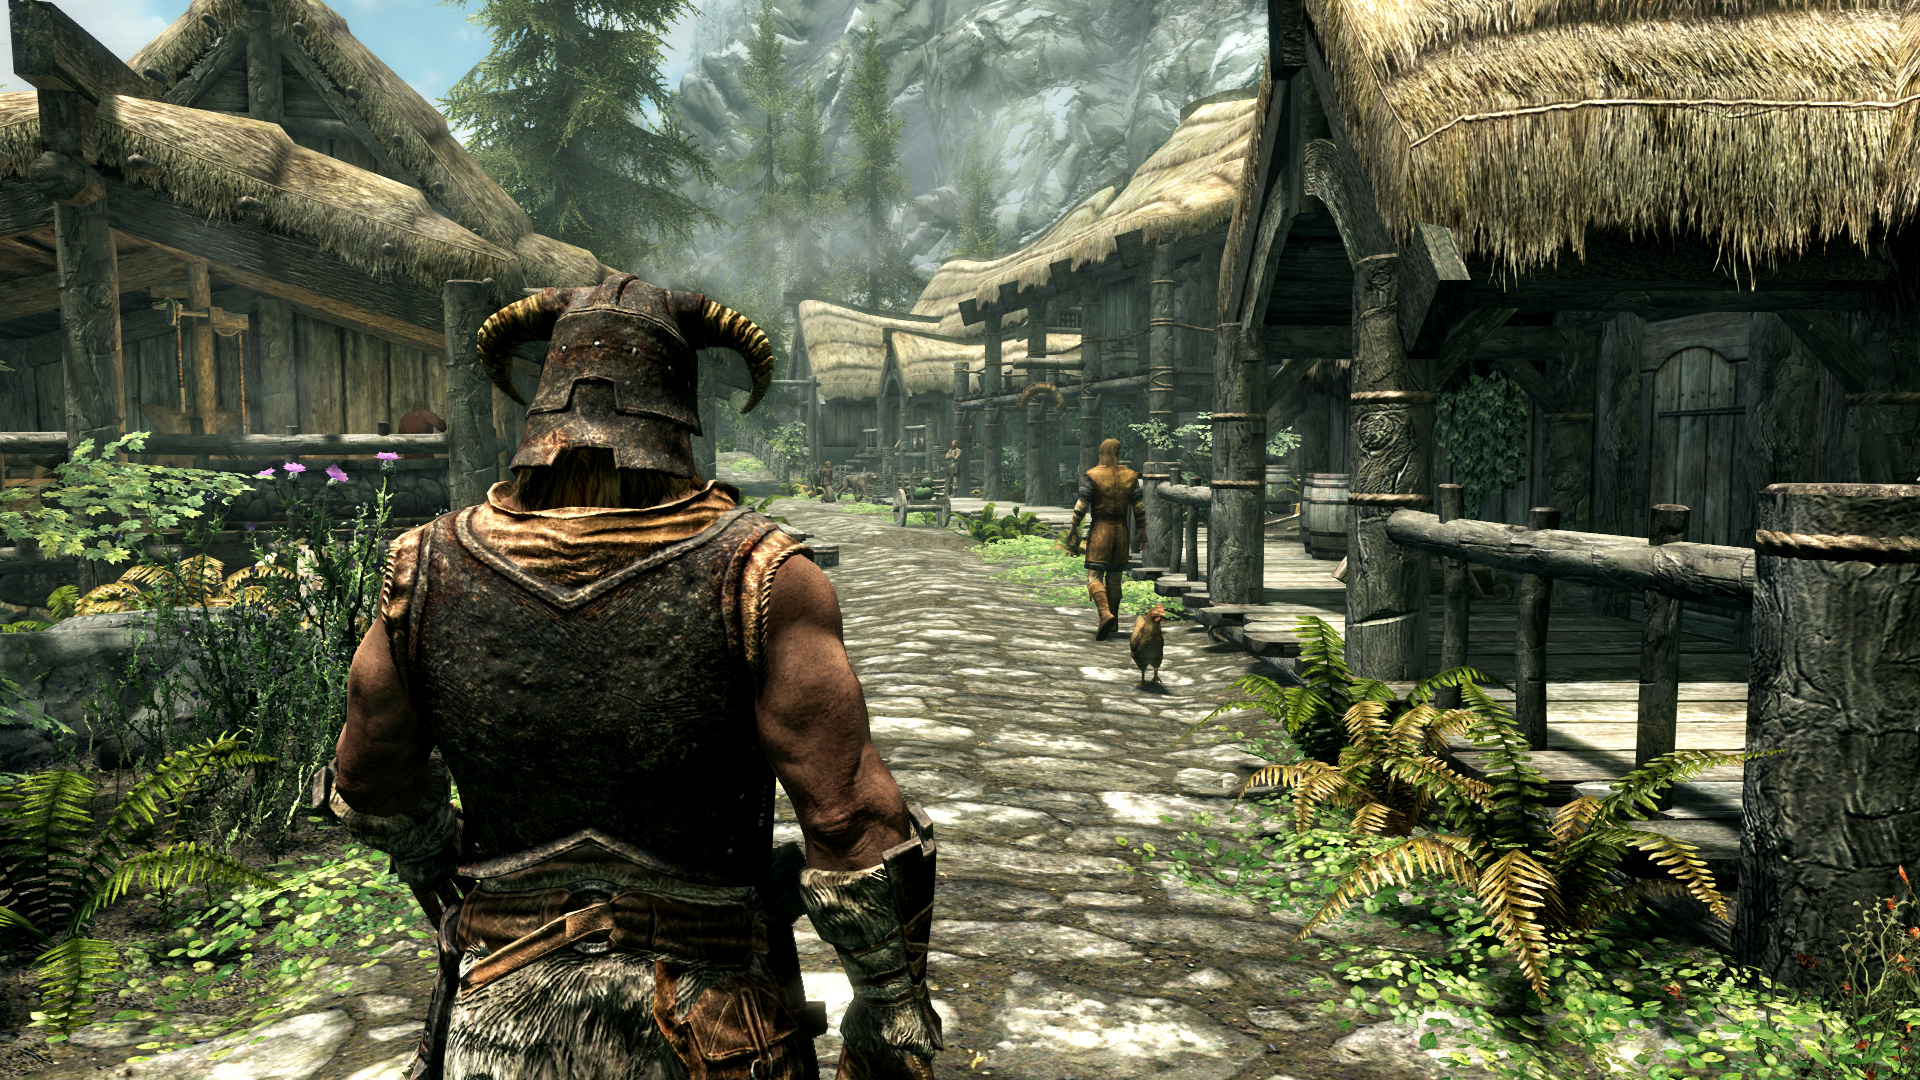 The Dragonborn walking through a town in The Elder Scrolls V: Skyrim.